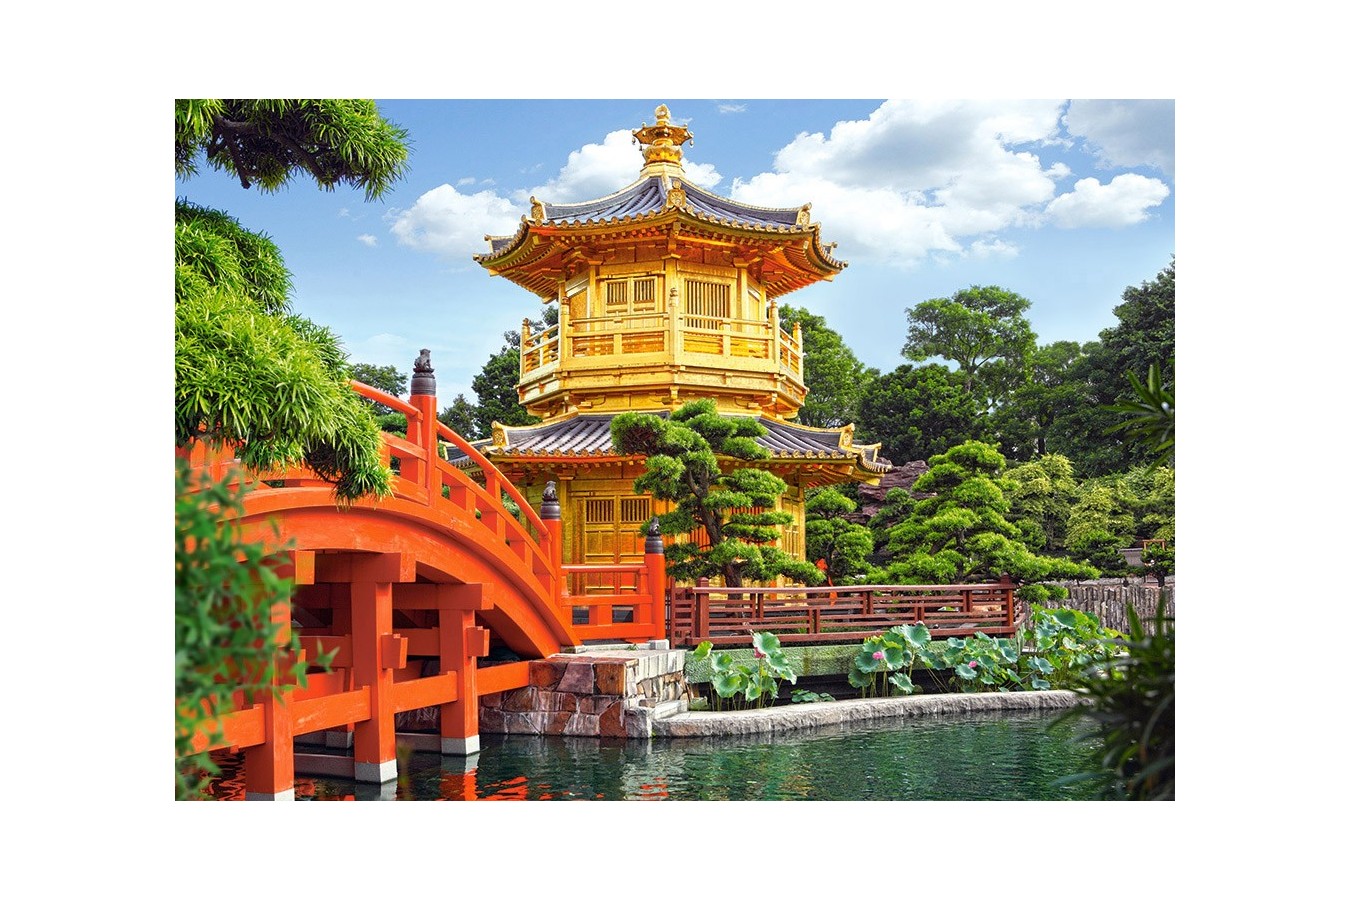 Puzzle Castorland - China Garden Hong Kong, 500 piese